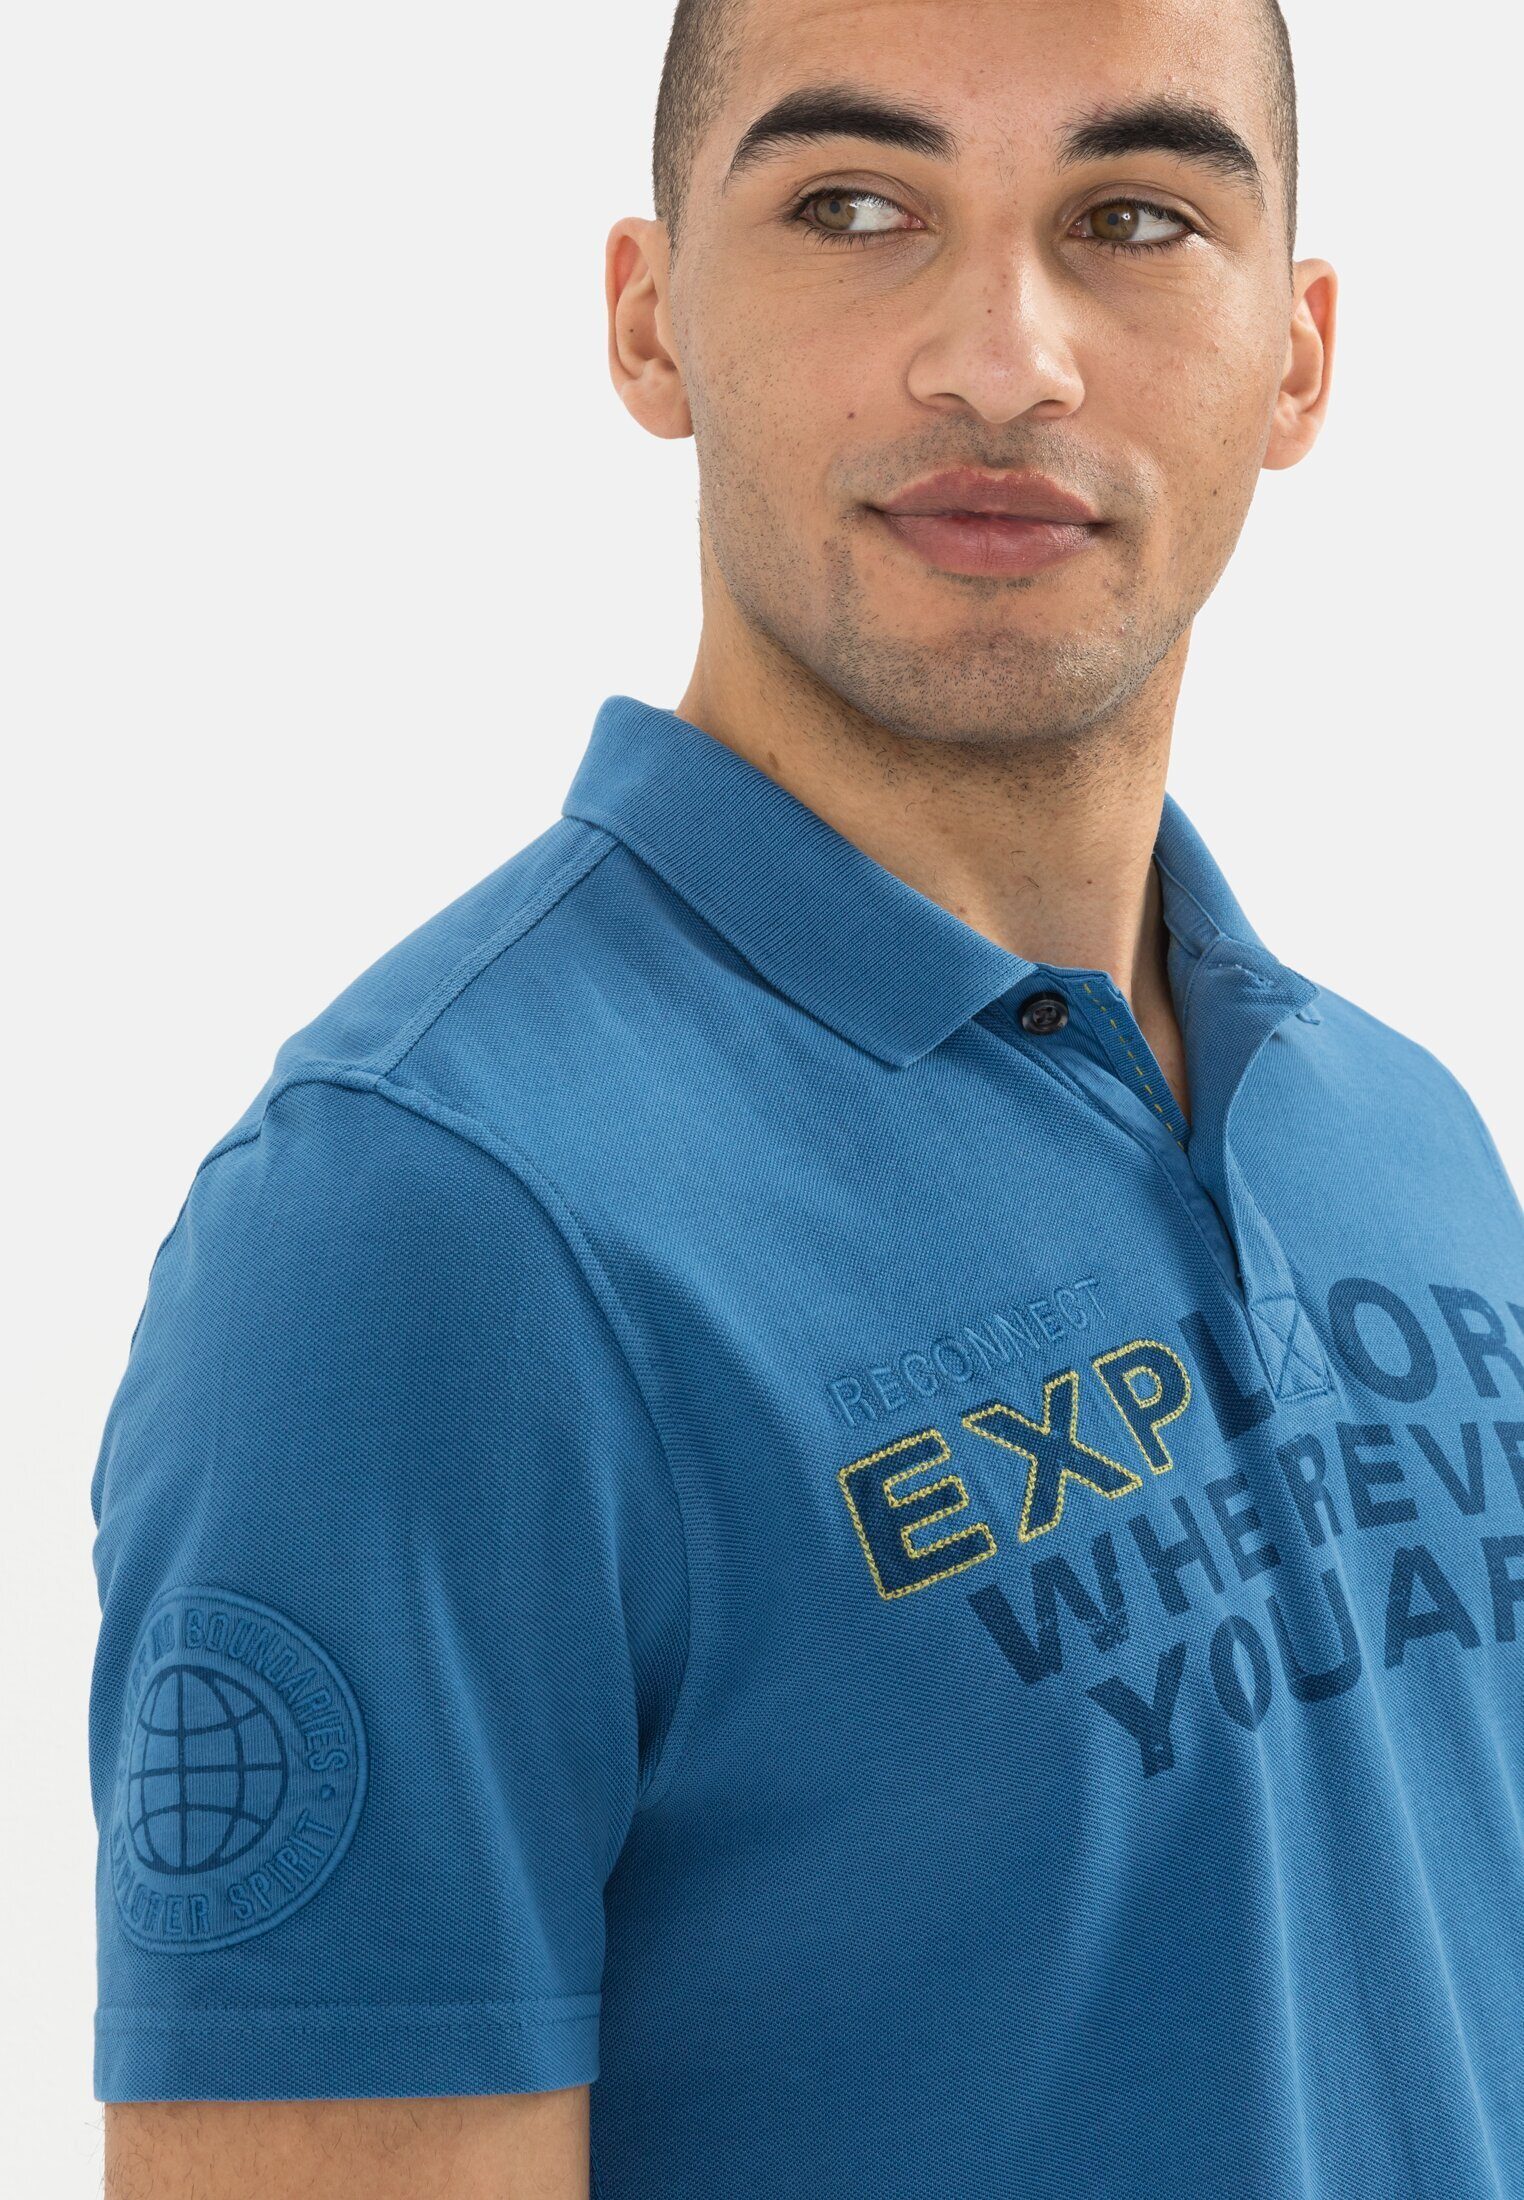 Shirts_Poloshirt Baumwolle Blau active Poloshirt aus camel